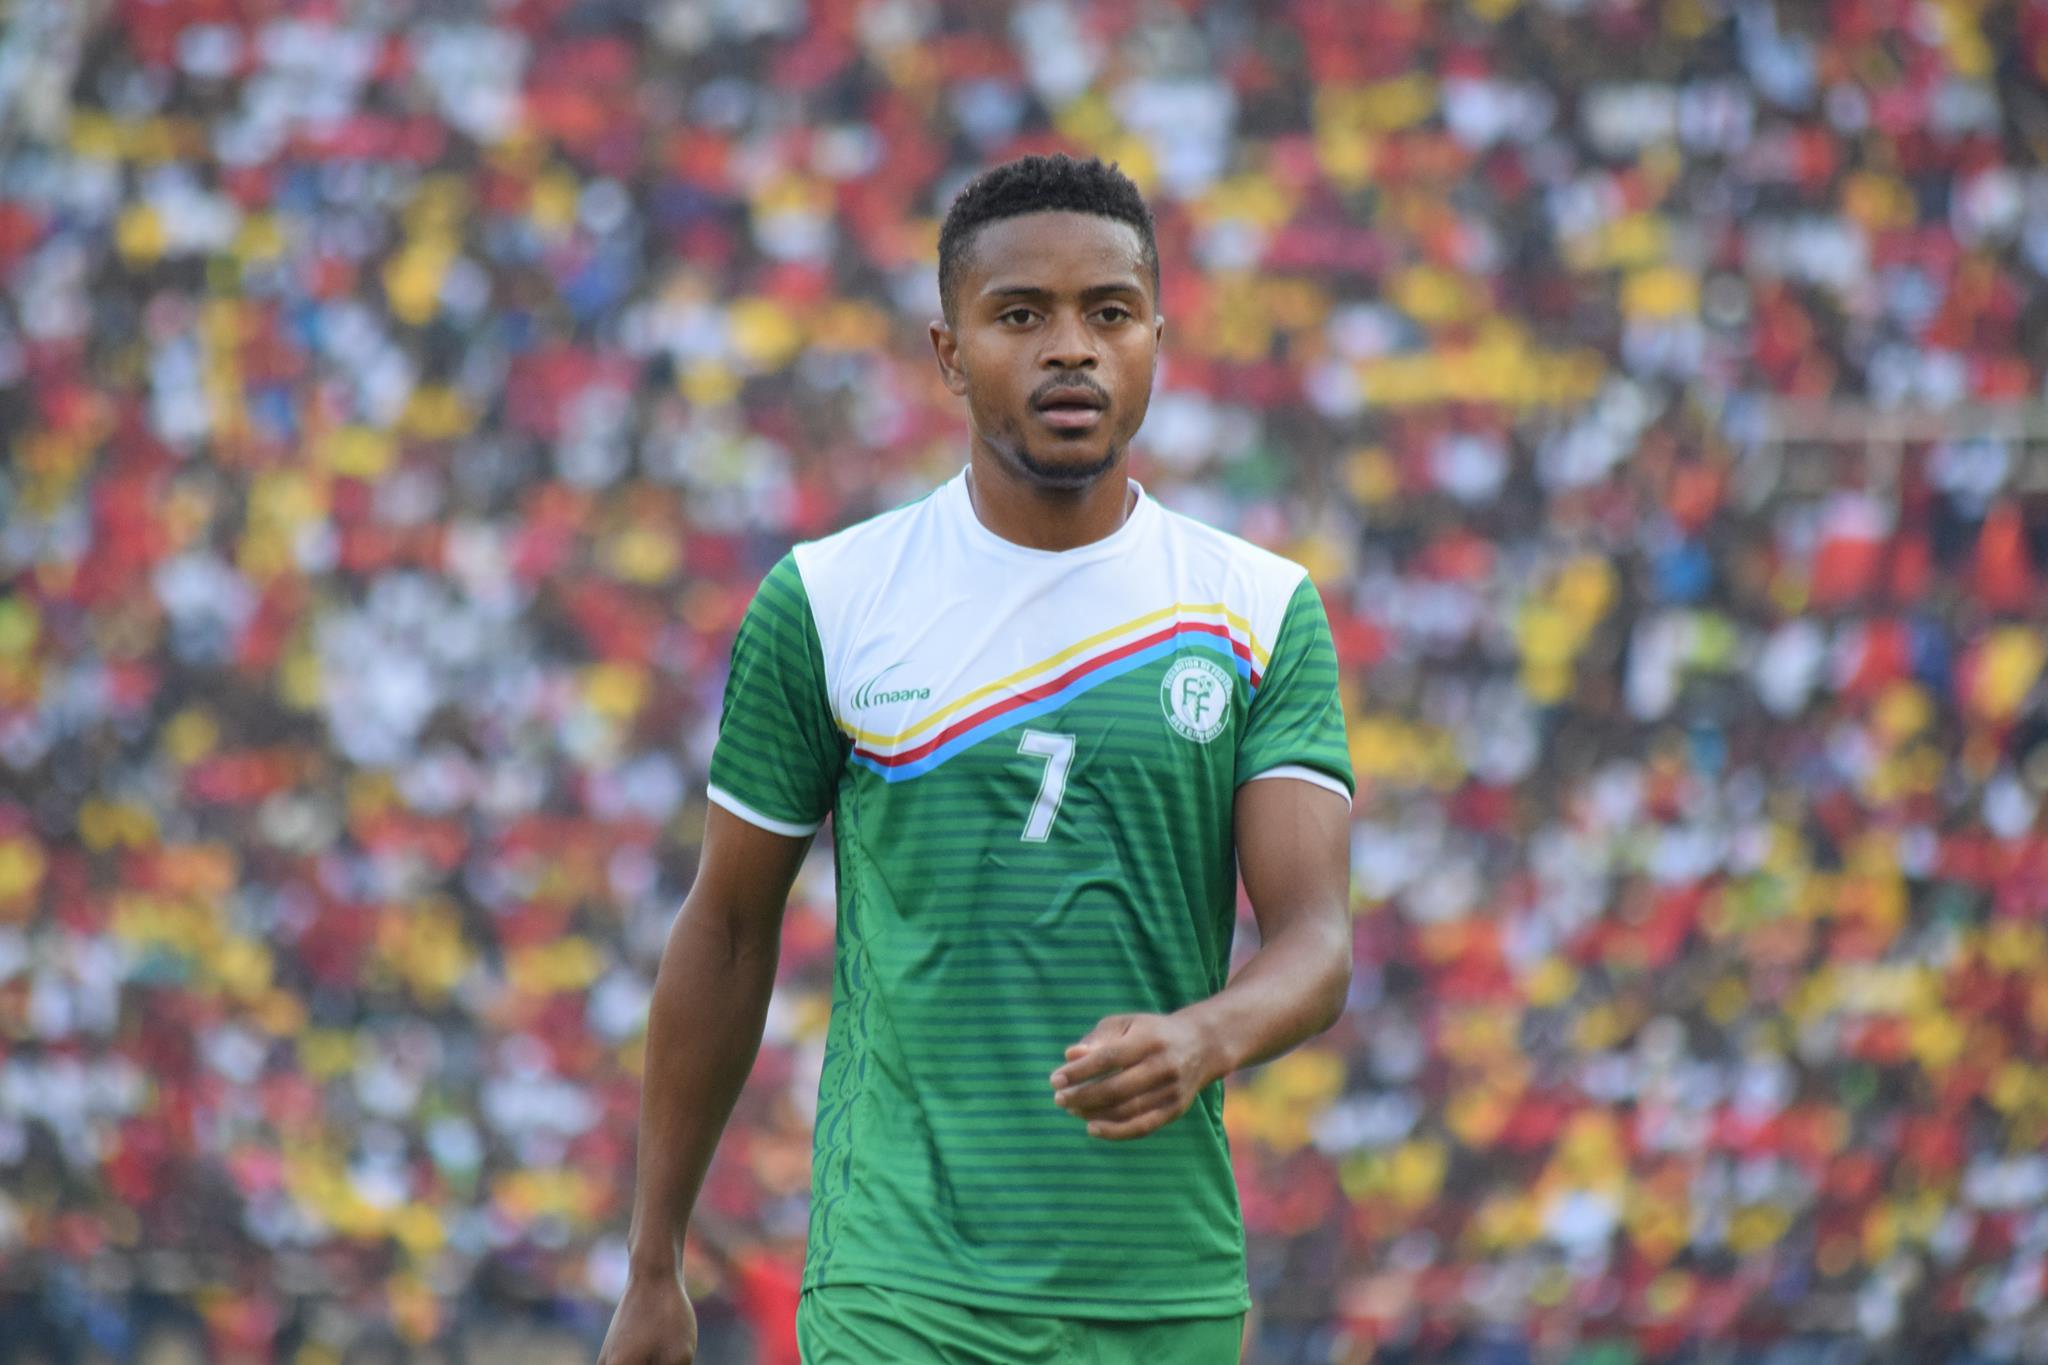 Ali Mmadi, Ali Mmadi à Tours, Camal Youssoufa rejoint le SC Schiltigheim, Comoros Football 269 | Portail du football des Comores